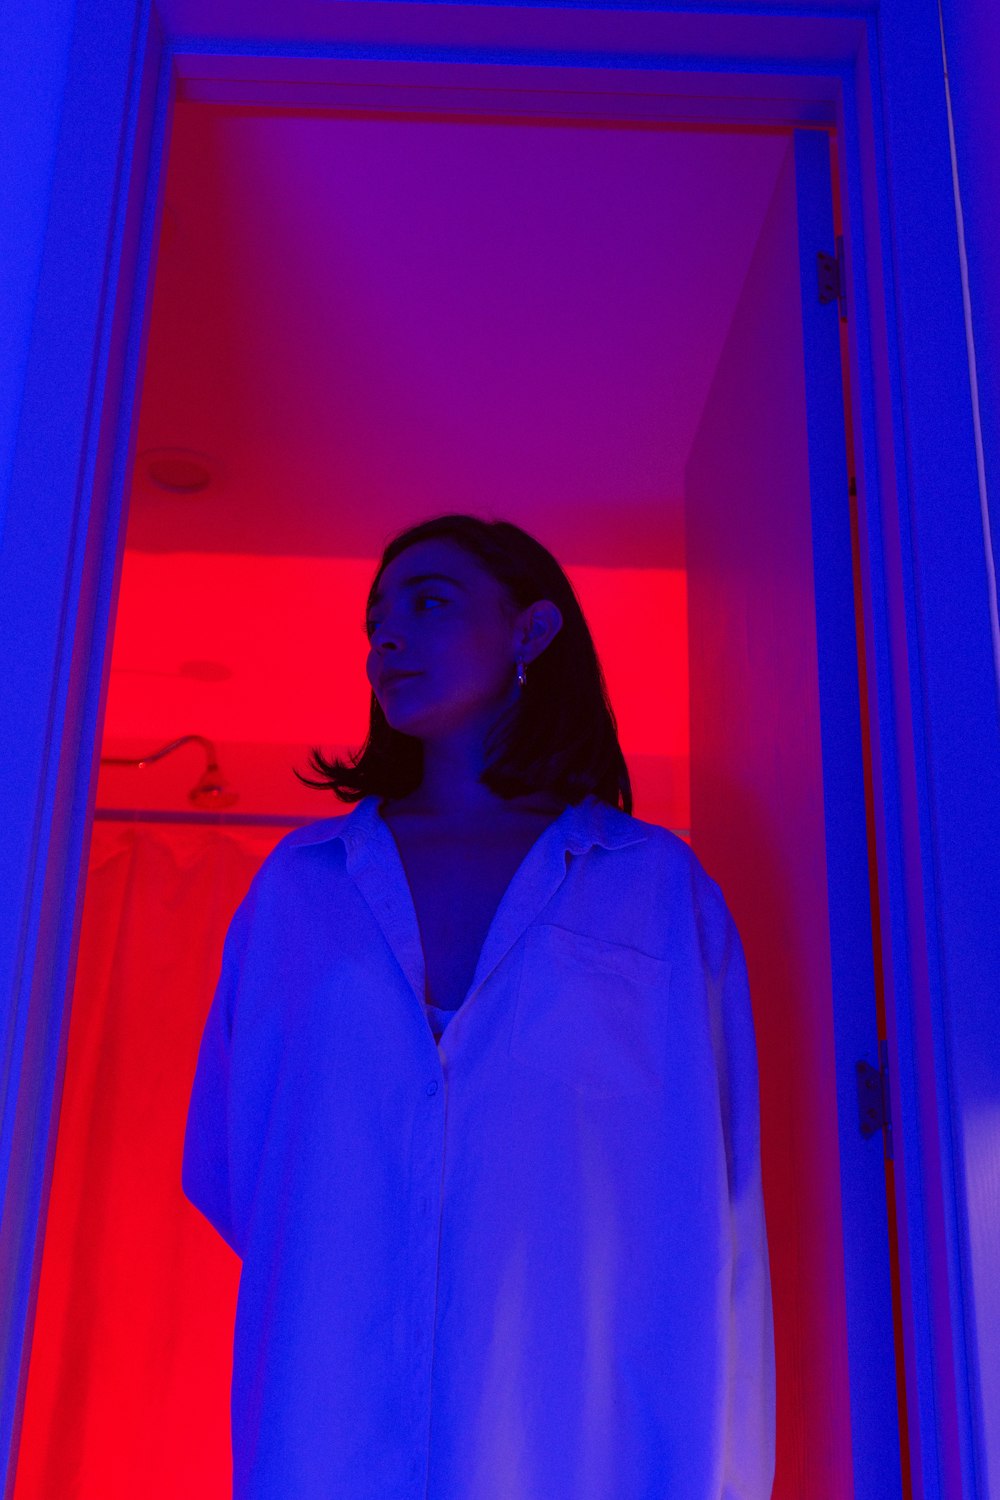 una donna in piedi in una stanza con una luce rossa e blu